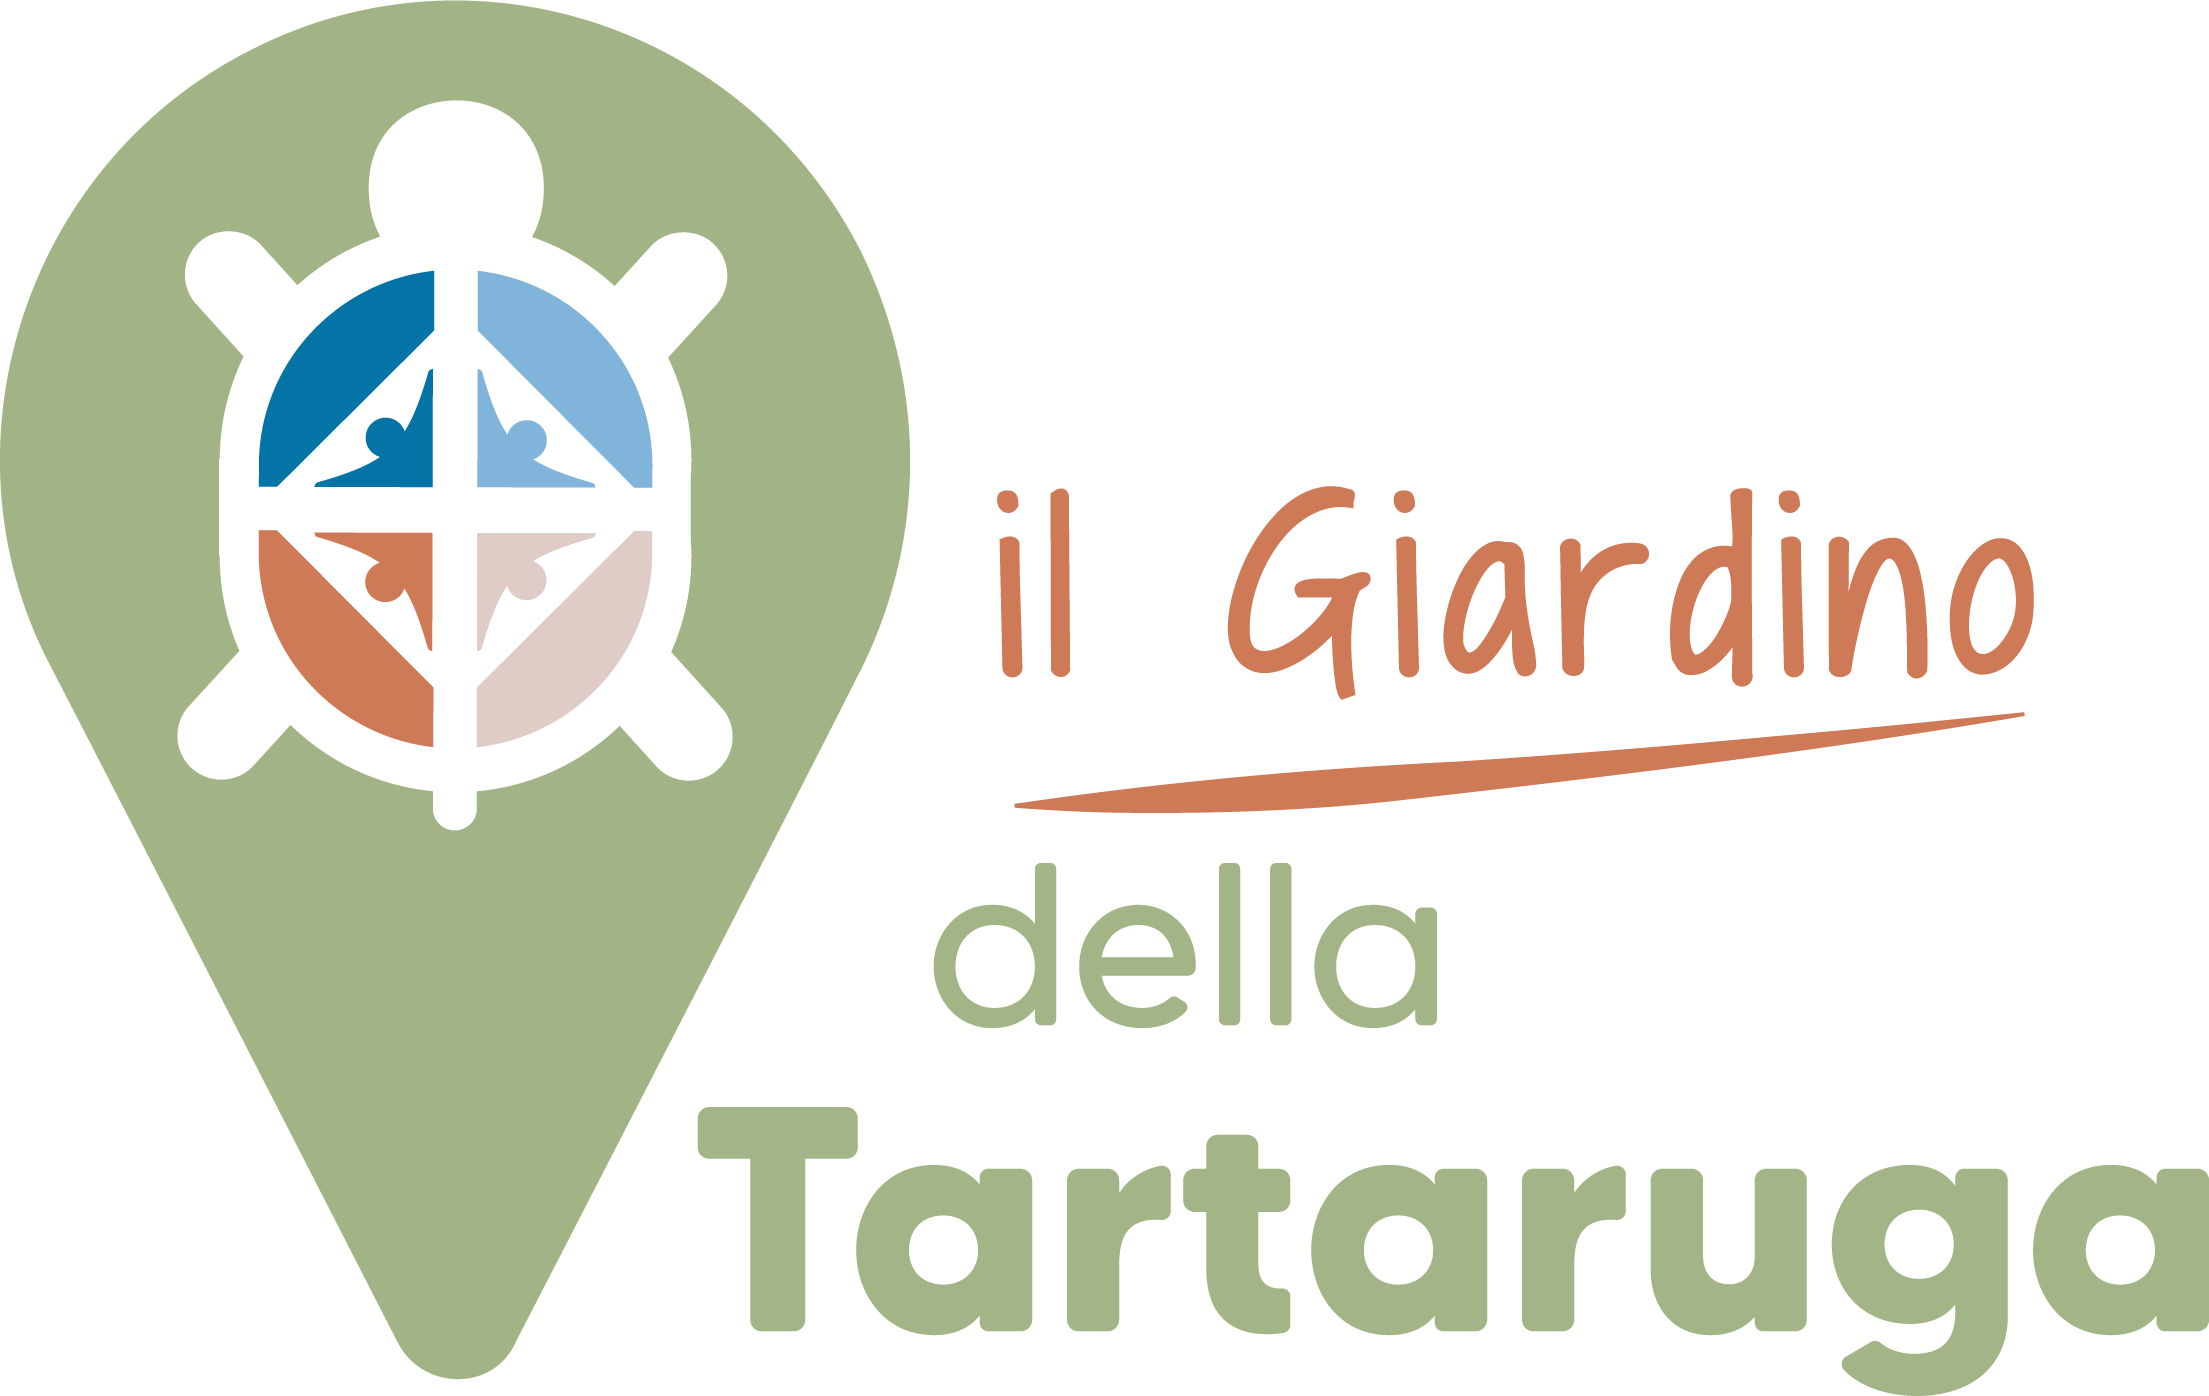 Logo del Giardino della Tartaruga, con simbolo della tartaruga